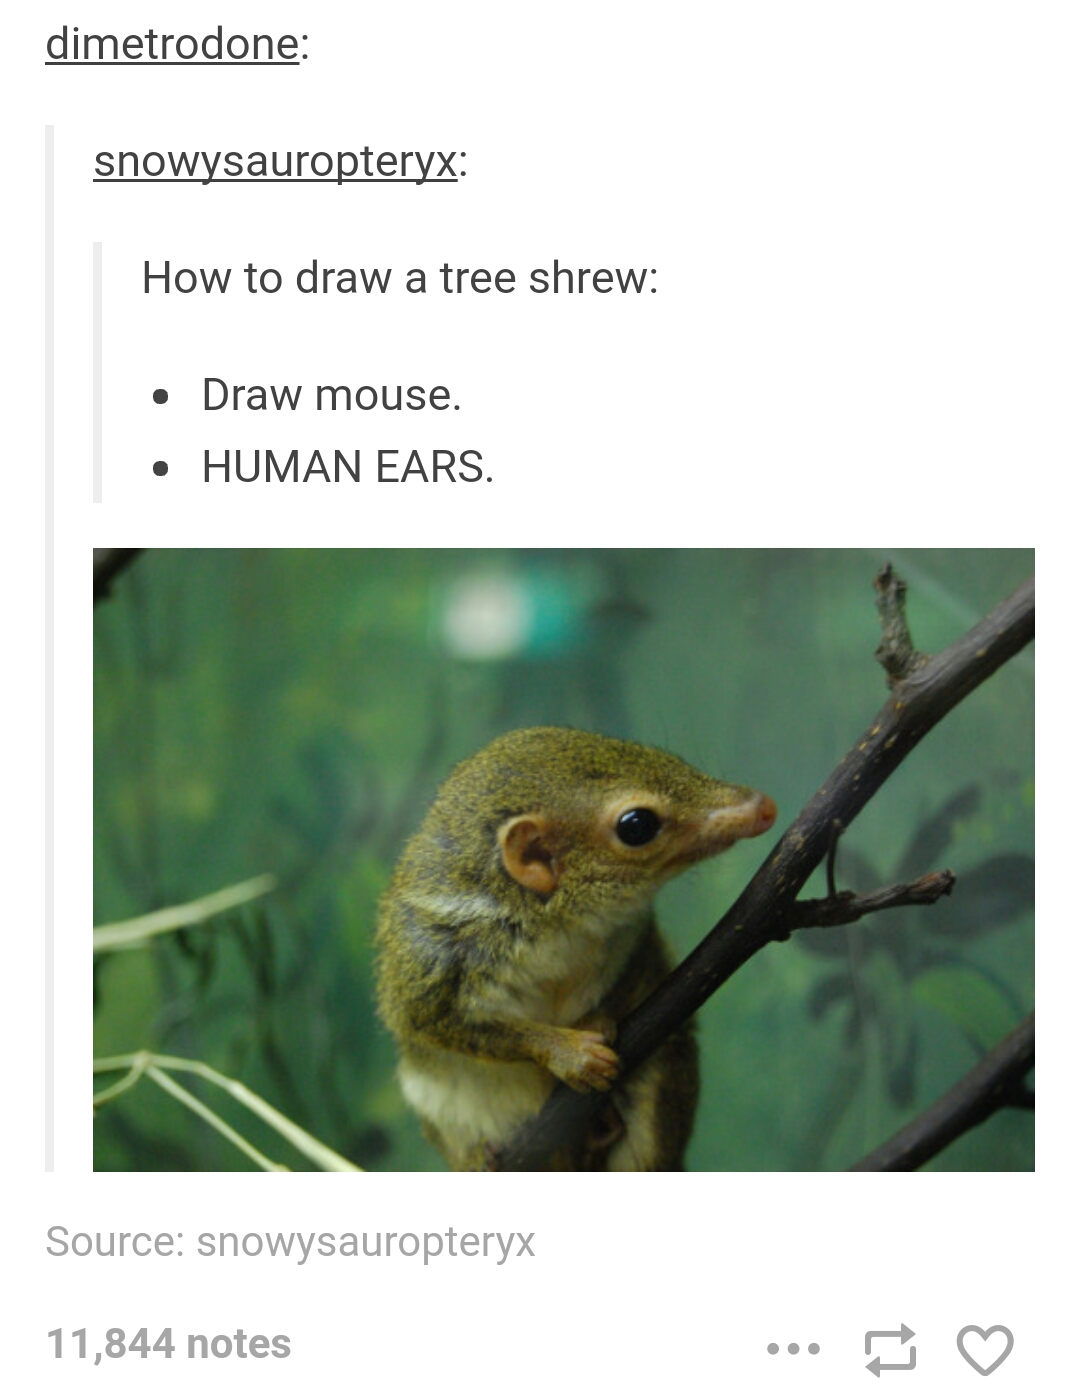 How to draw a humanoid tree shrew. 